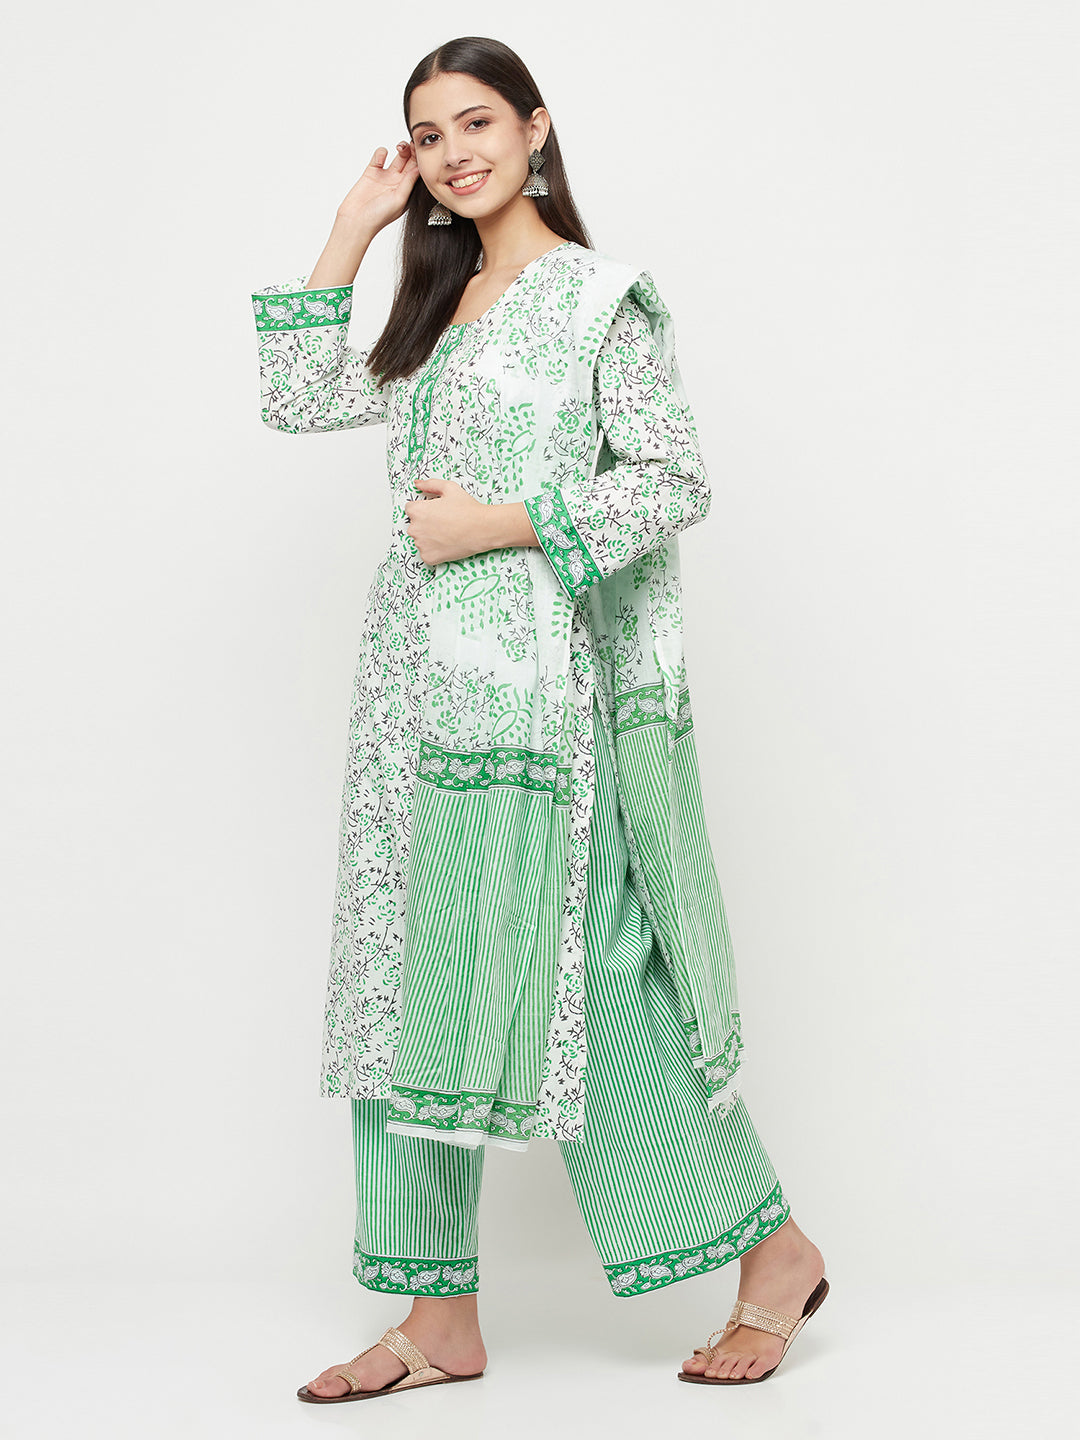 Cotton Floral Print Salwar Suit Dress Material